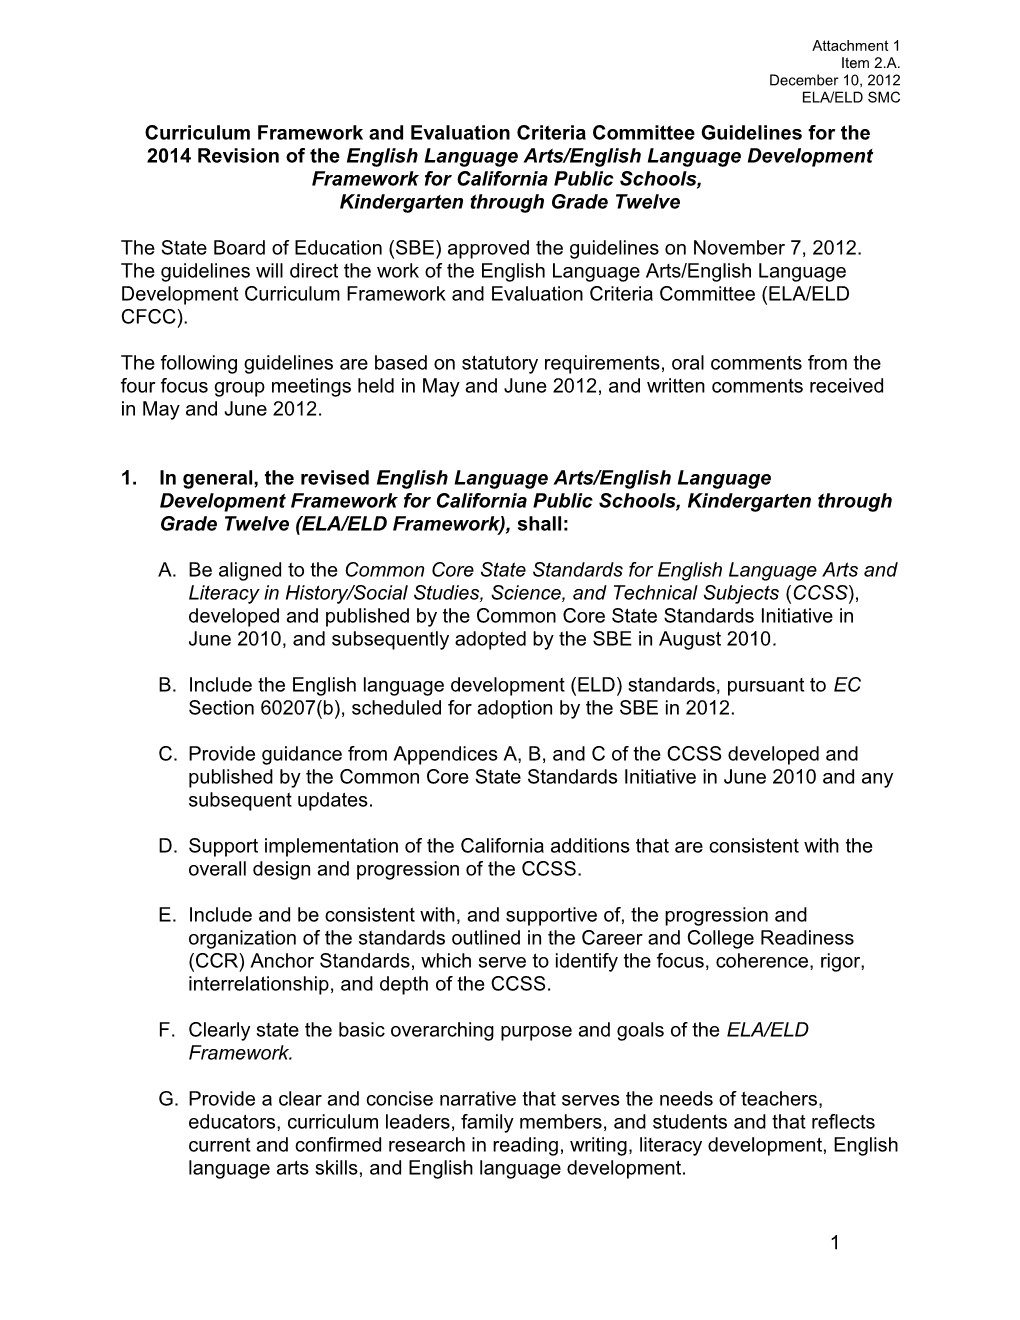 2014 Revision for the ELA/ELD CFCC Framework - Curriculum Frameworks (CA Dept of Education)